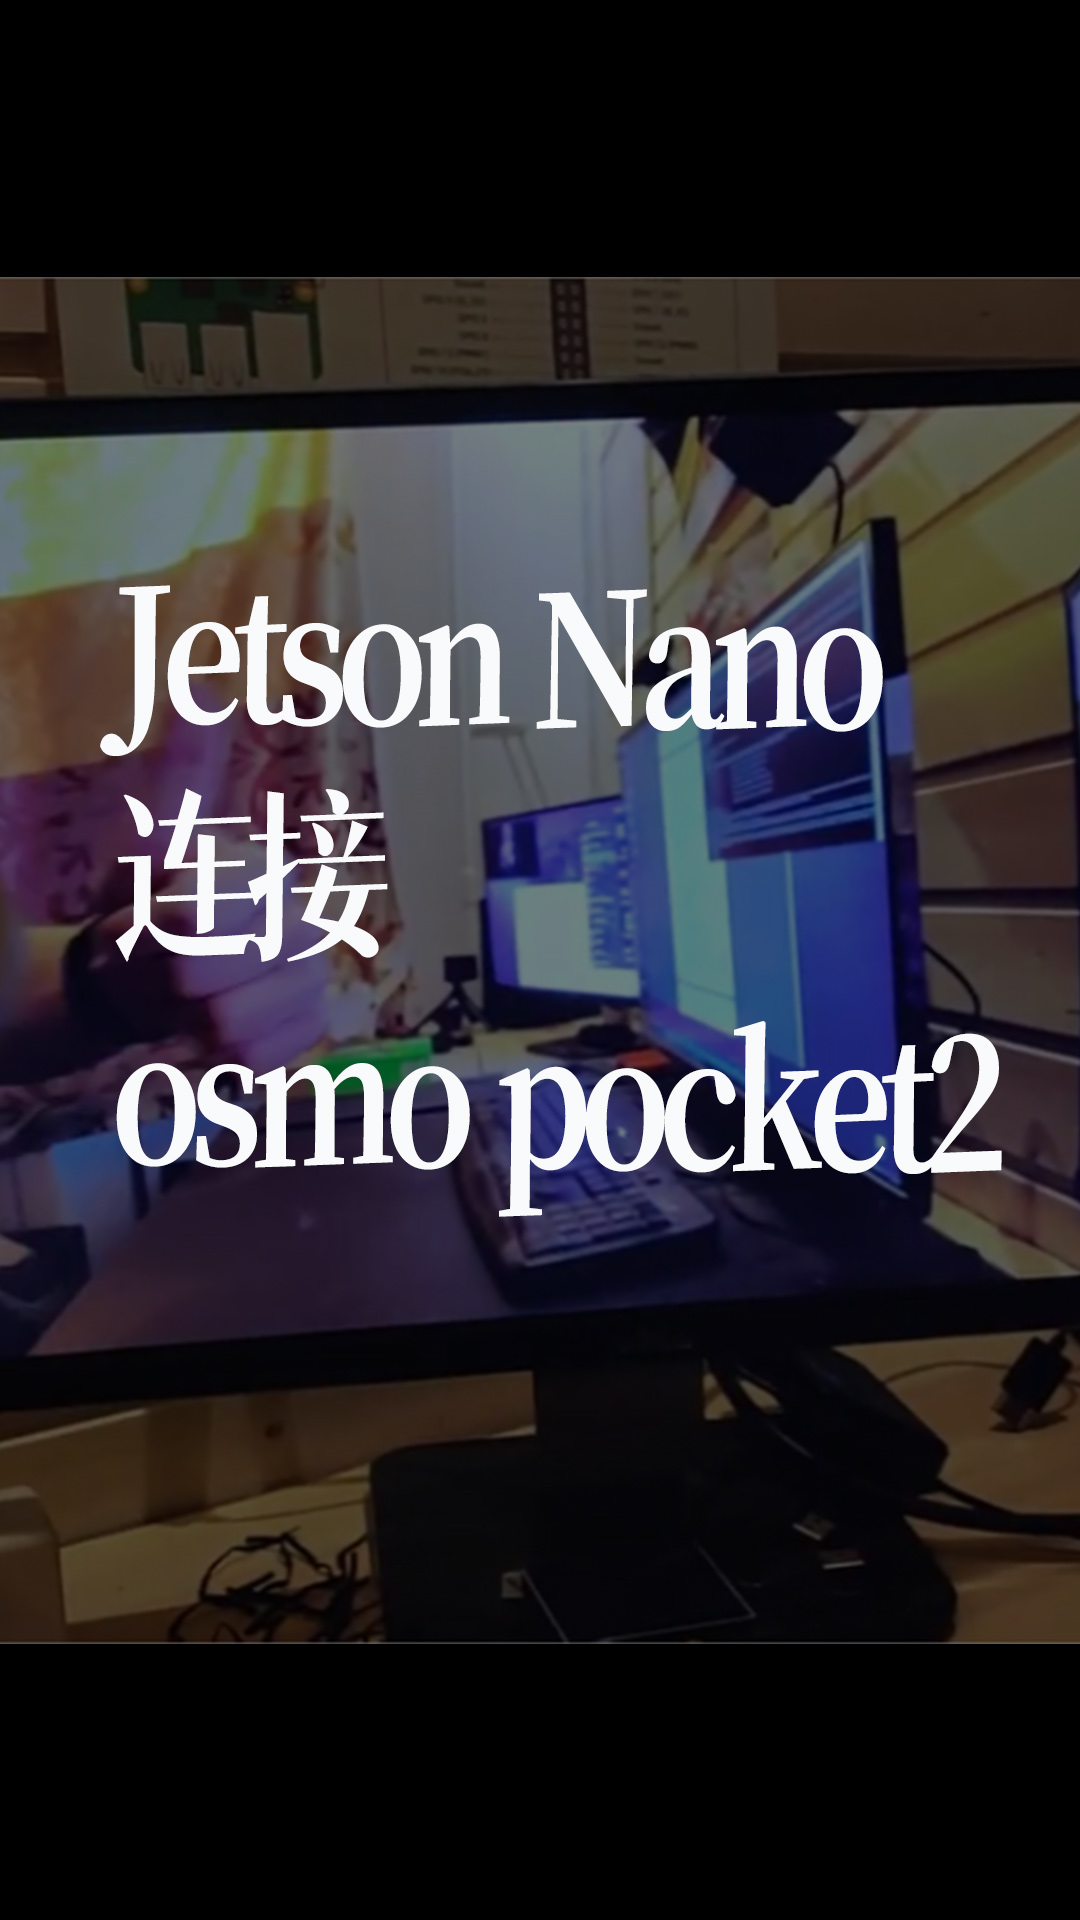 Jetson Nano连接osmo pocket2